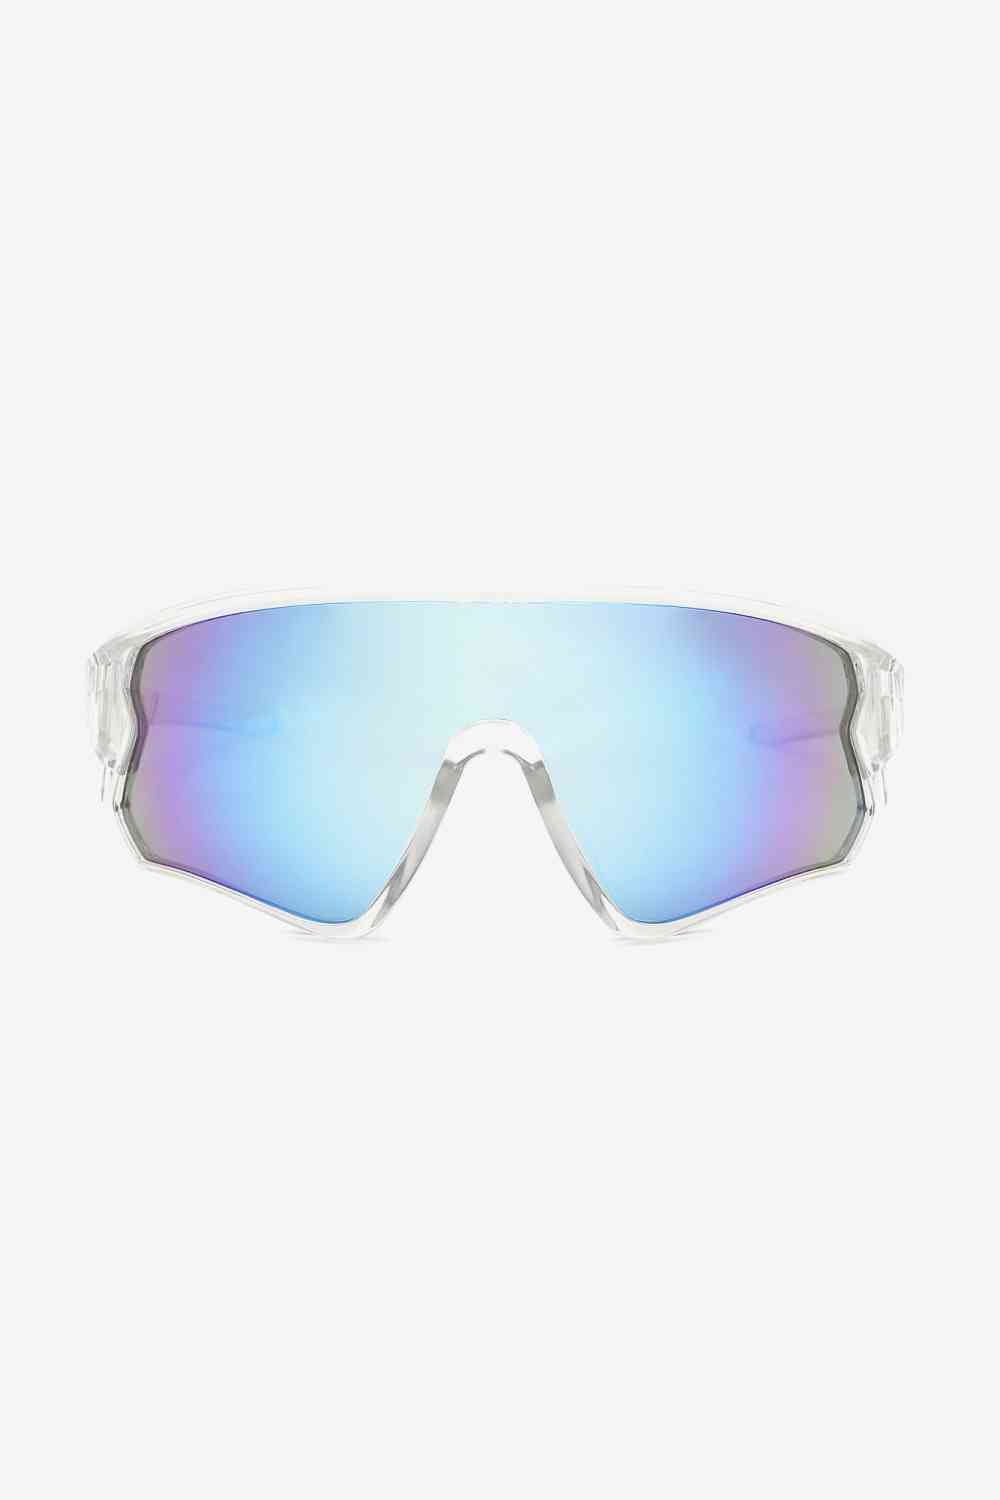 TEEK - Shade Shield Sunglasses EYEGLASSES TEEK Trend Pastel  Blue  